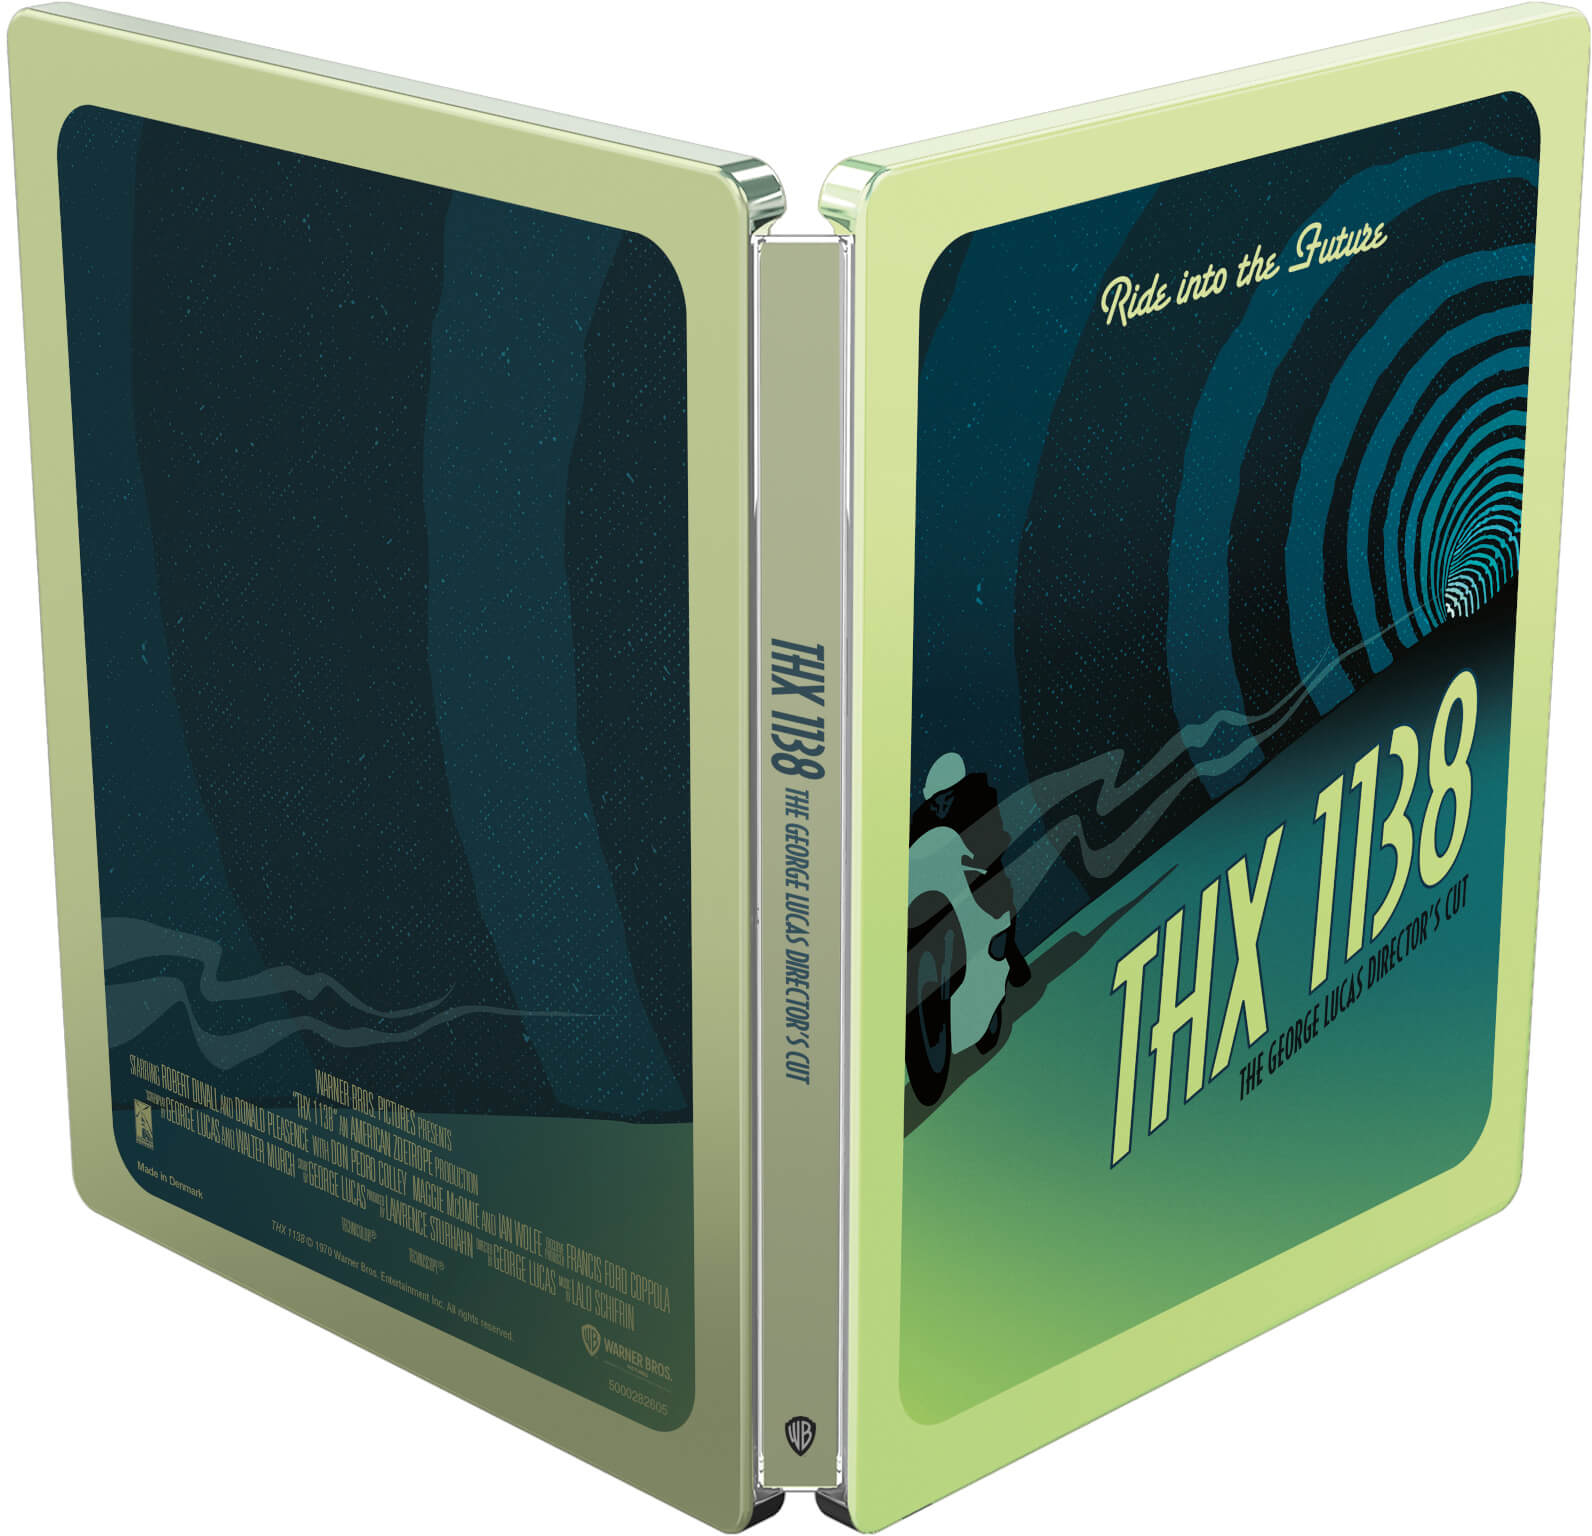 THX 1138 - SteelBook Blu-ray 